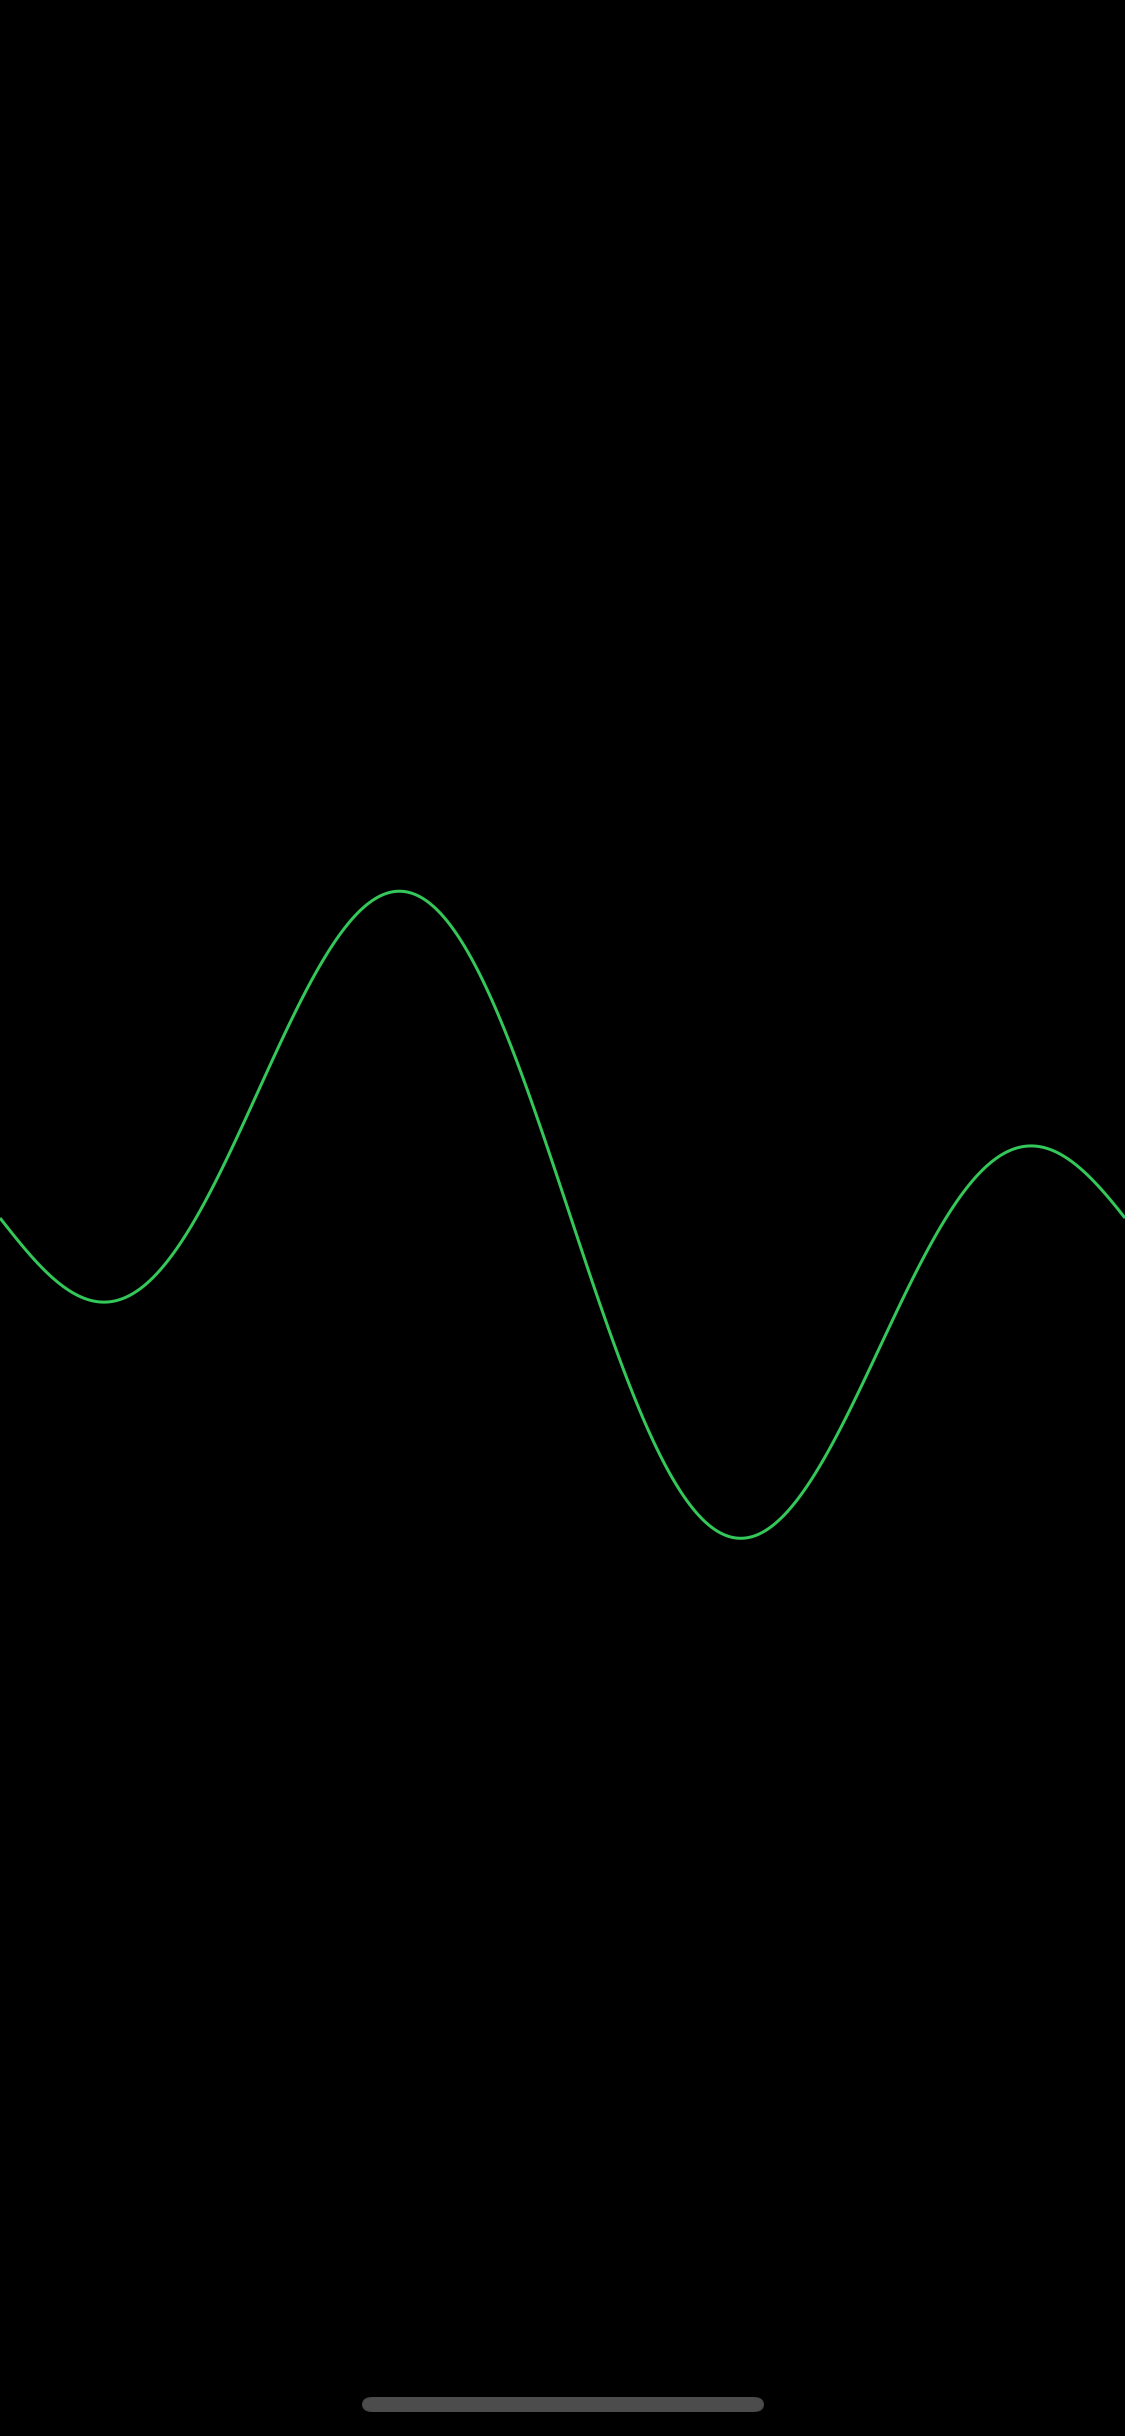 Green single wave